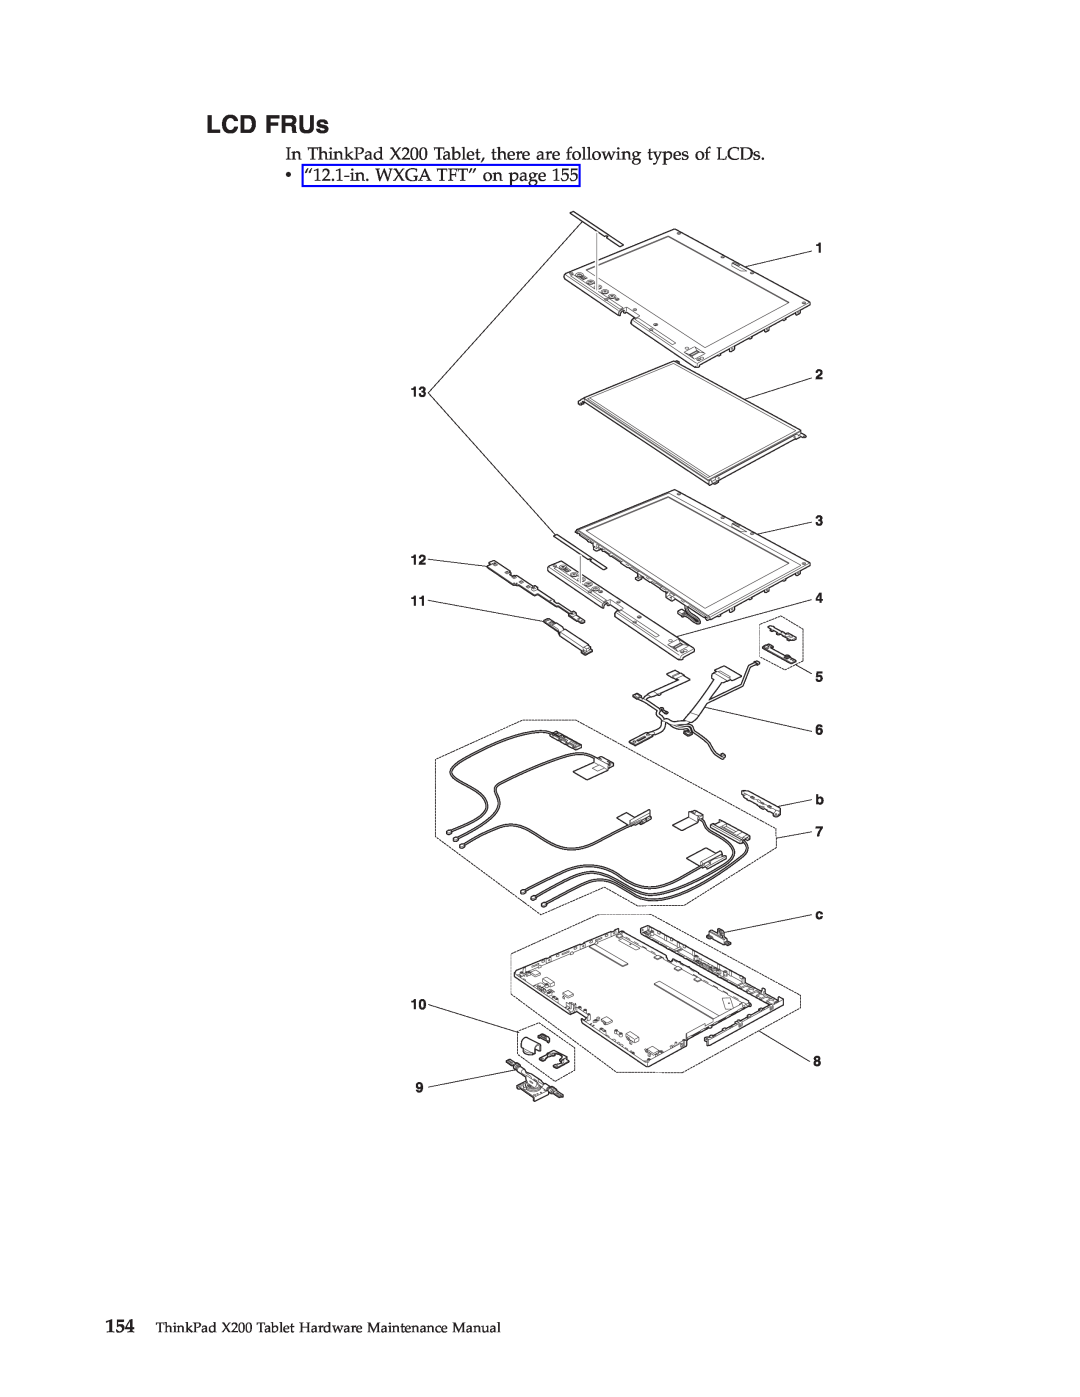 Lenovo X200 manual LCD FRUs, v“12.1-in.WXGA TFT” on page, 13 12 11 10 9, 1 2 3 4 5 6 b c 8 